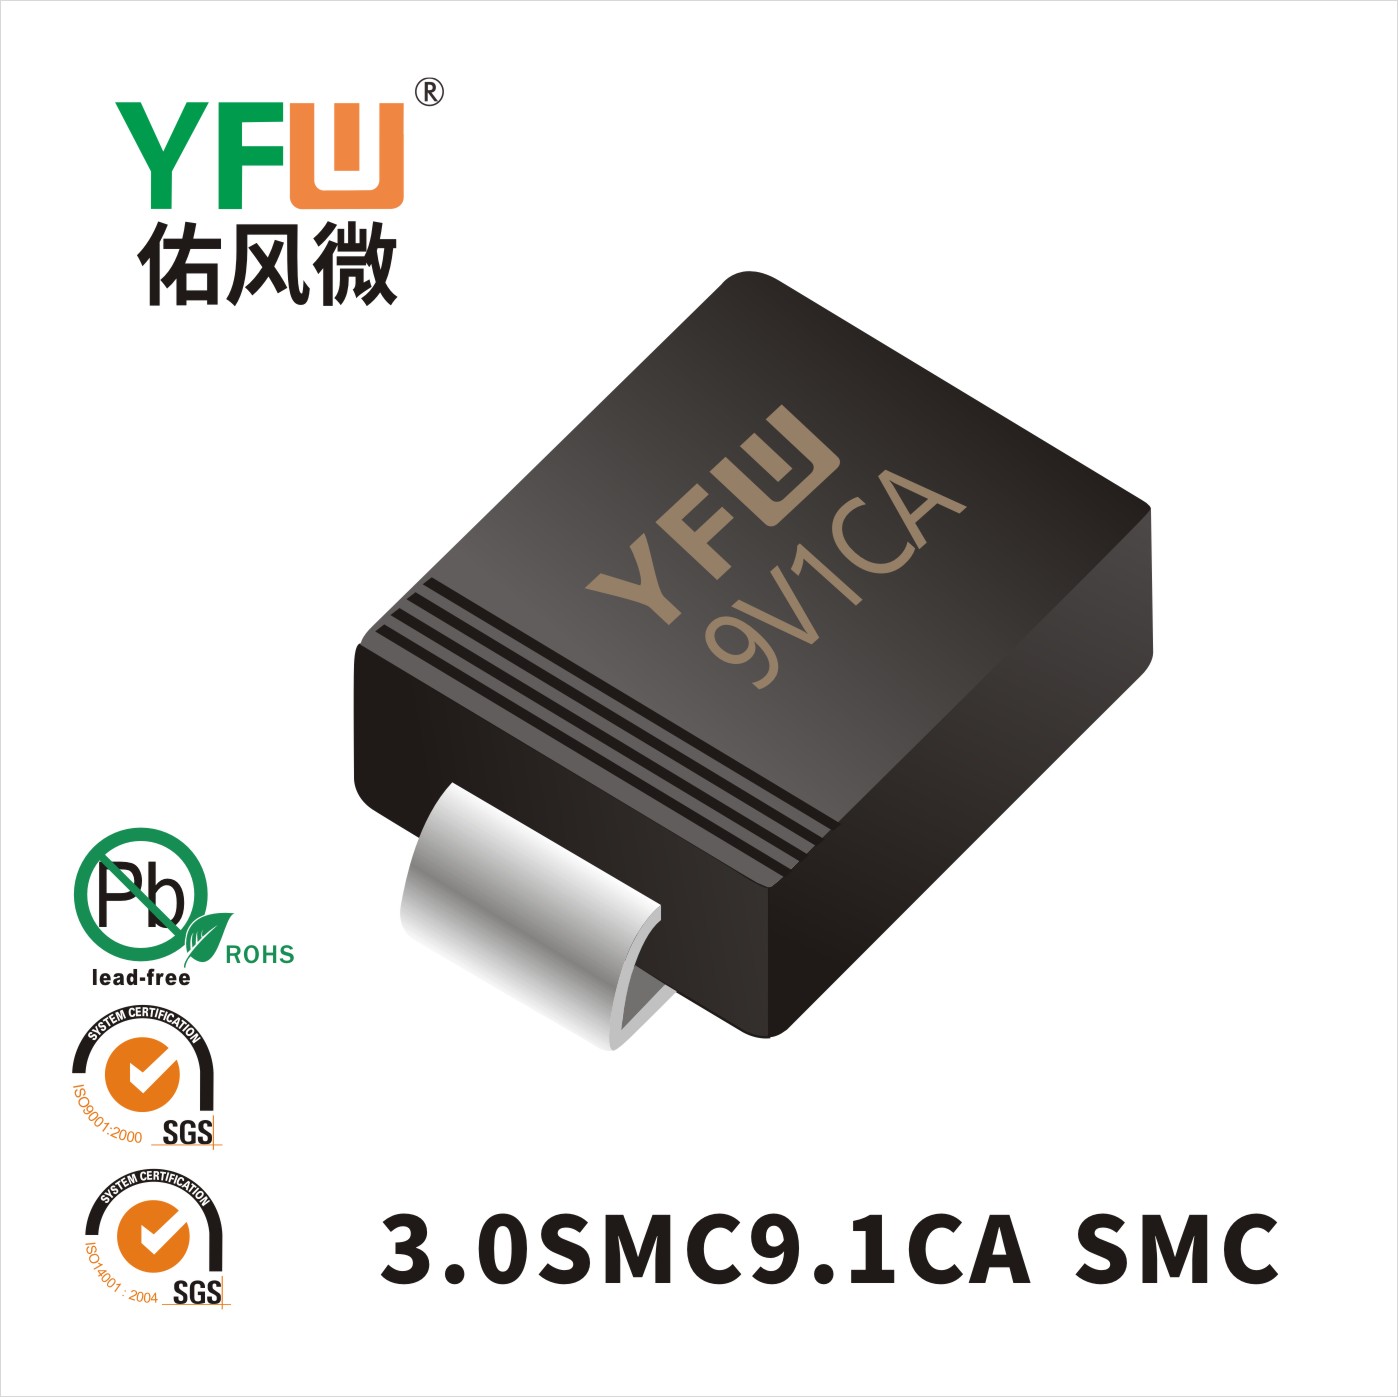 3.0SMC9.1CA SMC(DO-214AB)_Marking:9V1CA _Transient Voltage Suppressor Diode_YFW brand